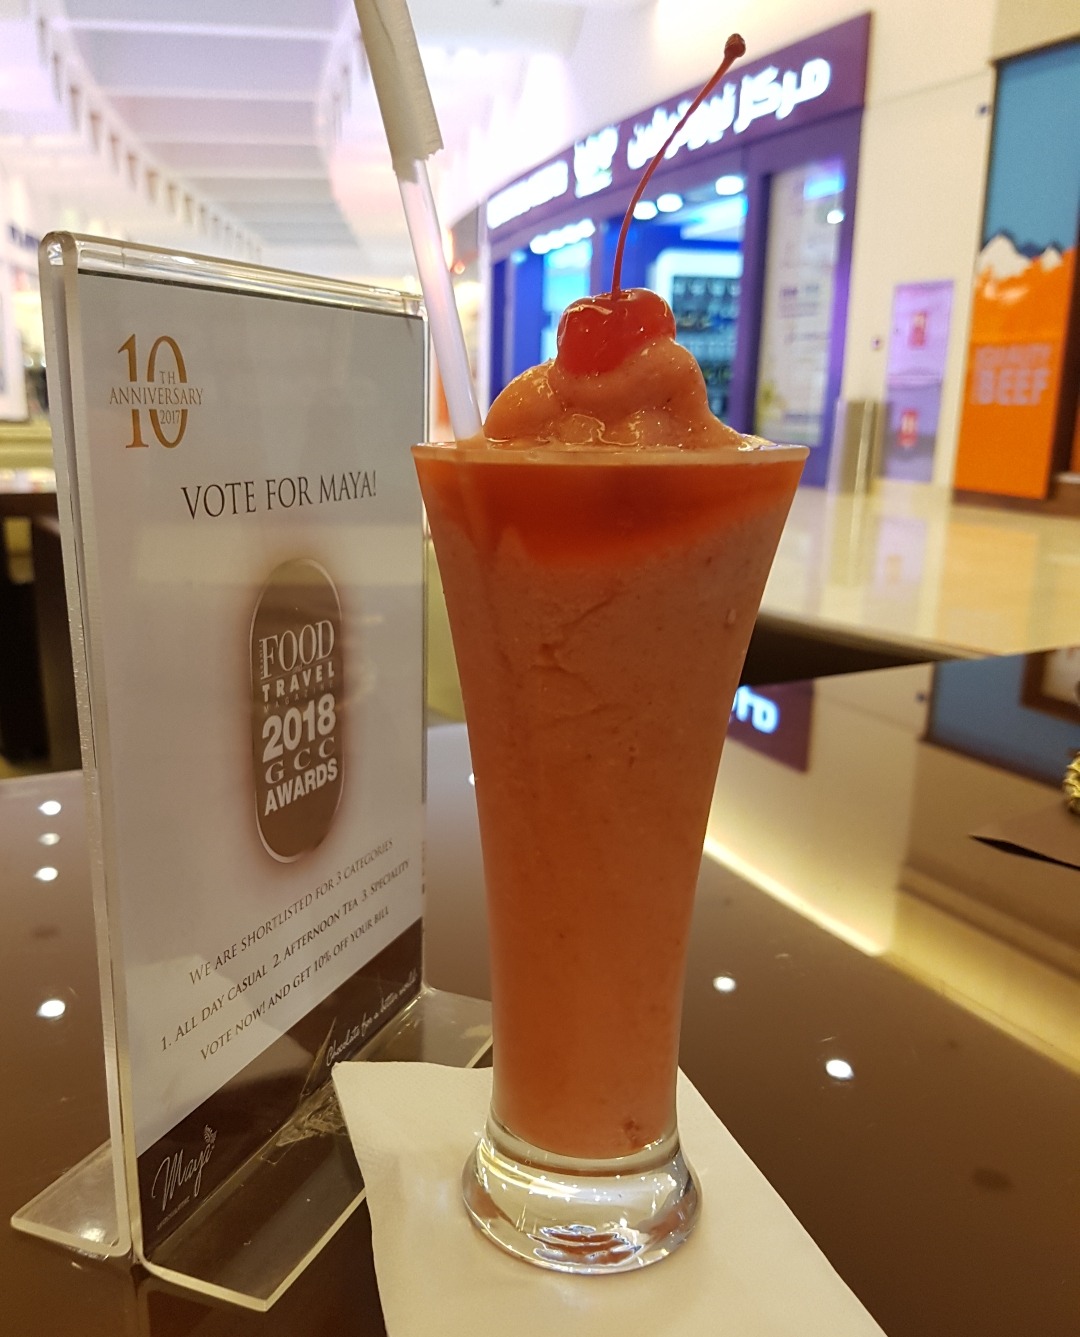 Strawberry and cherry smoothie @ مايا لا شوكولاتري - البحرين